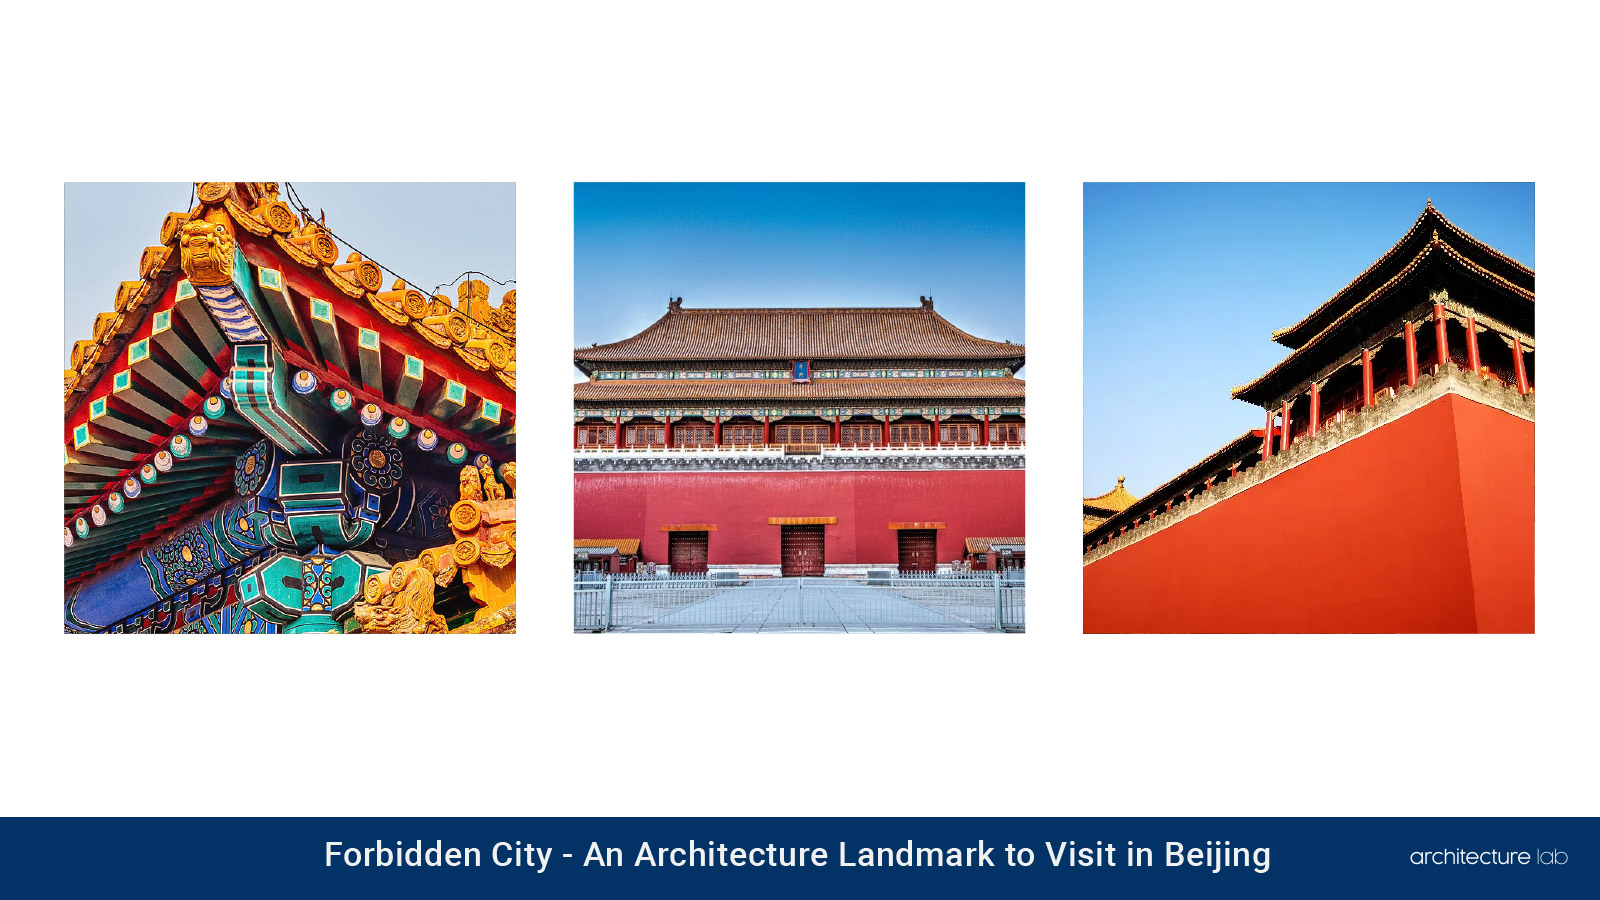 Forbidden city: an architecture landmark to visit in beijing